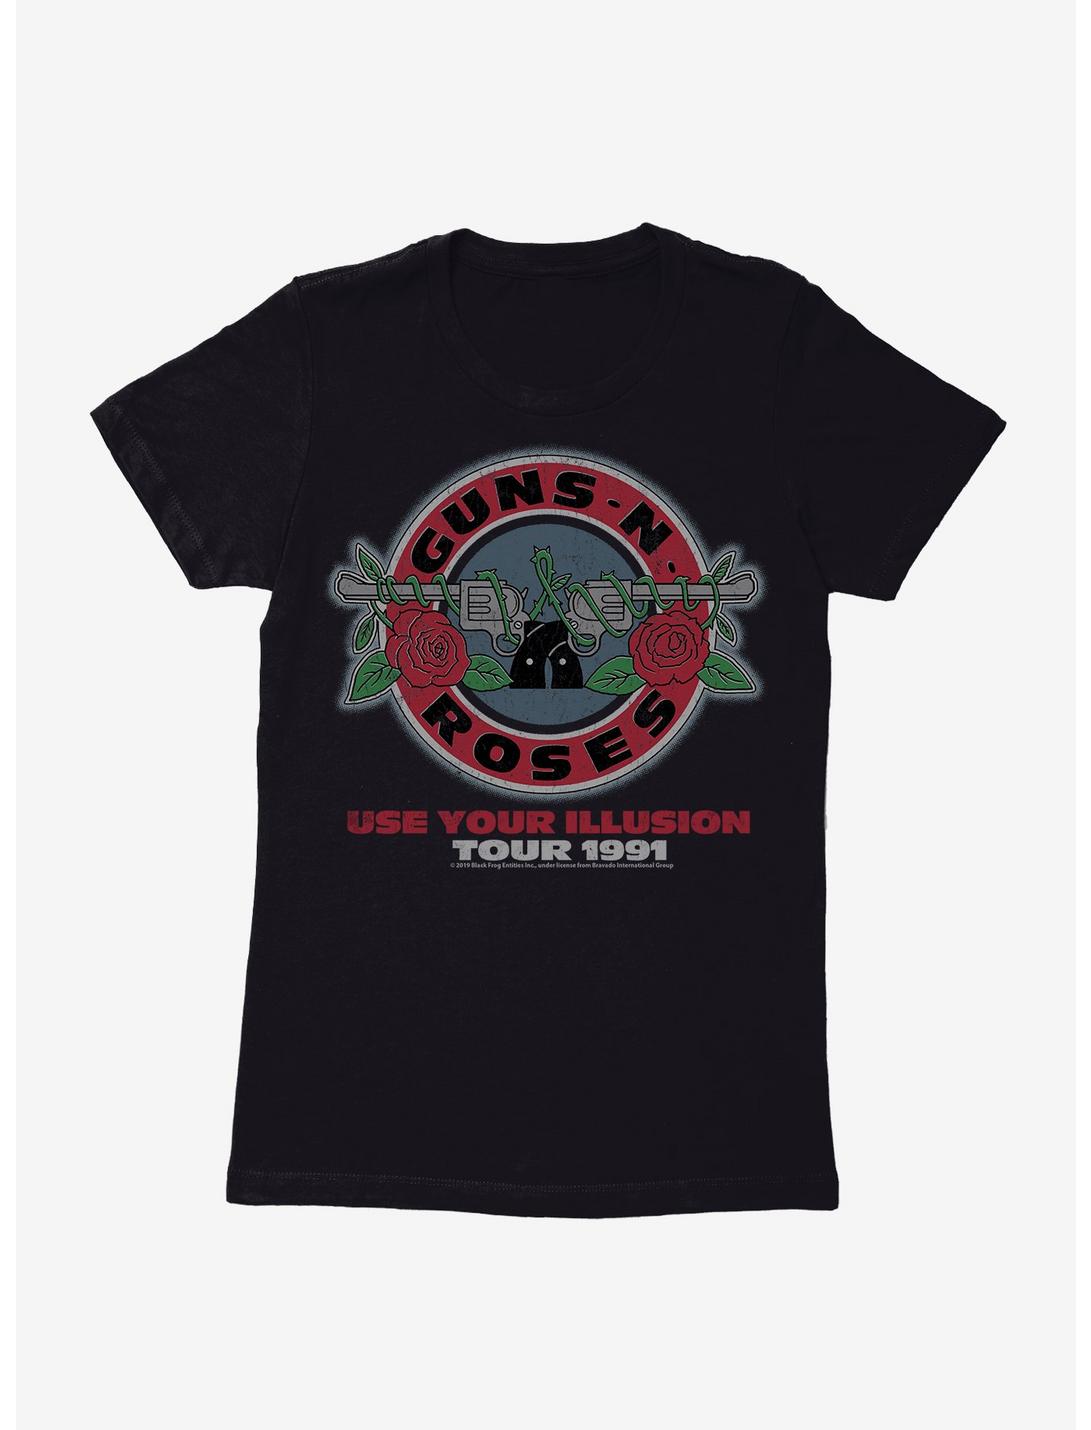 Guns N' Roses Use Your Illusion Tour 1991 Womens T-Shirt, , hi-res